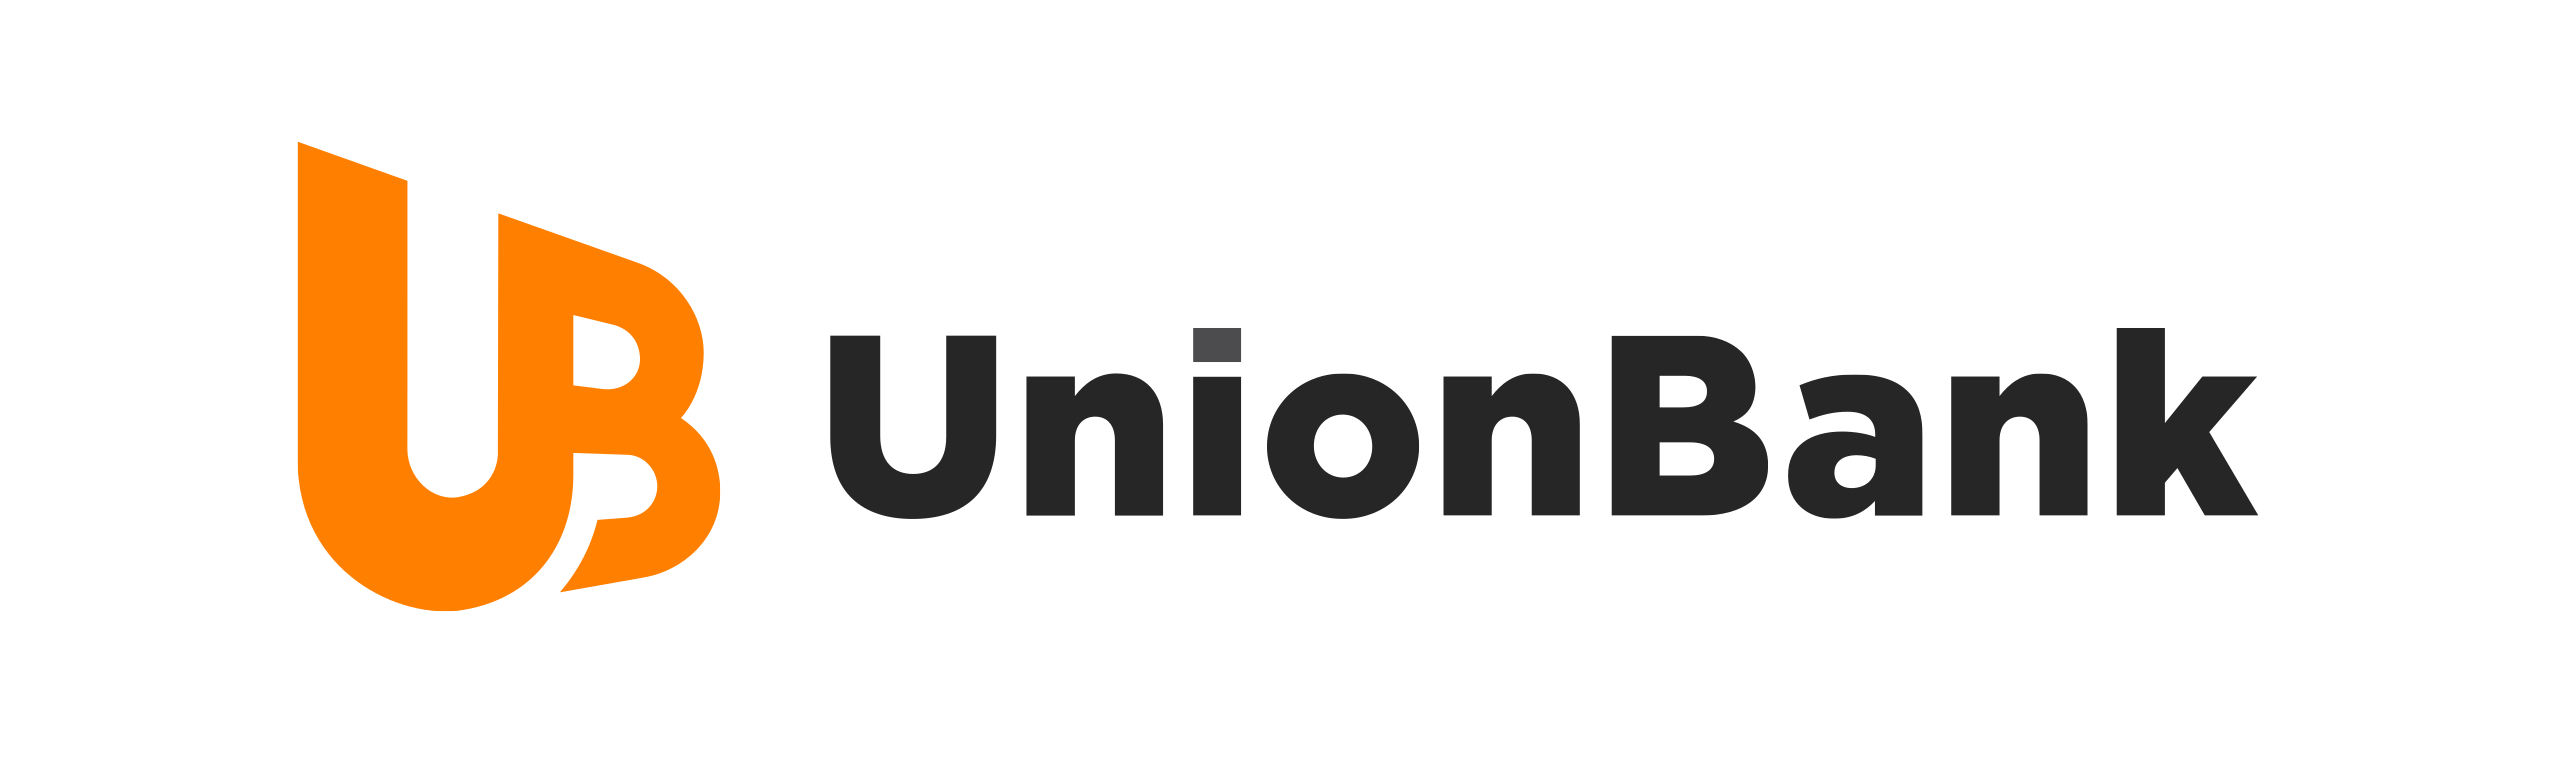 Union Bank Logo - Unionbank 2018 logo.svg